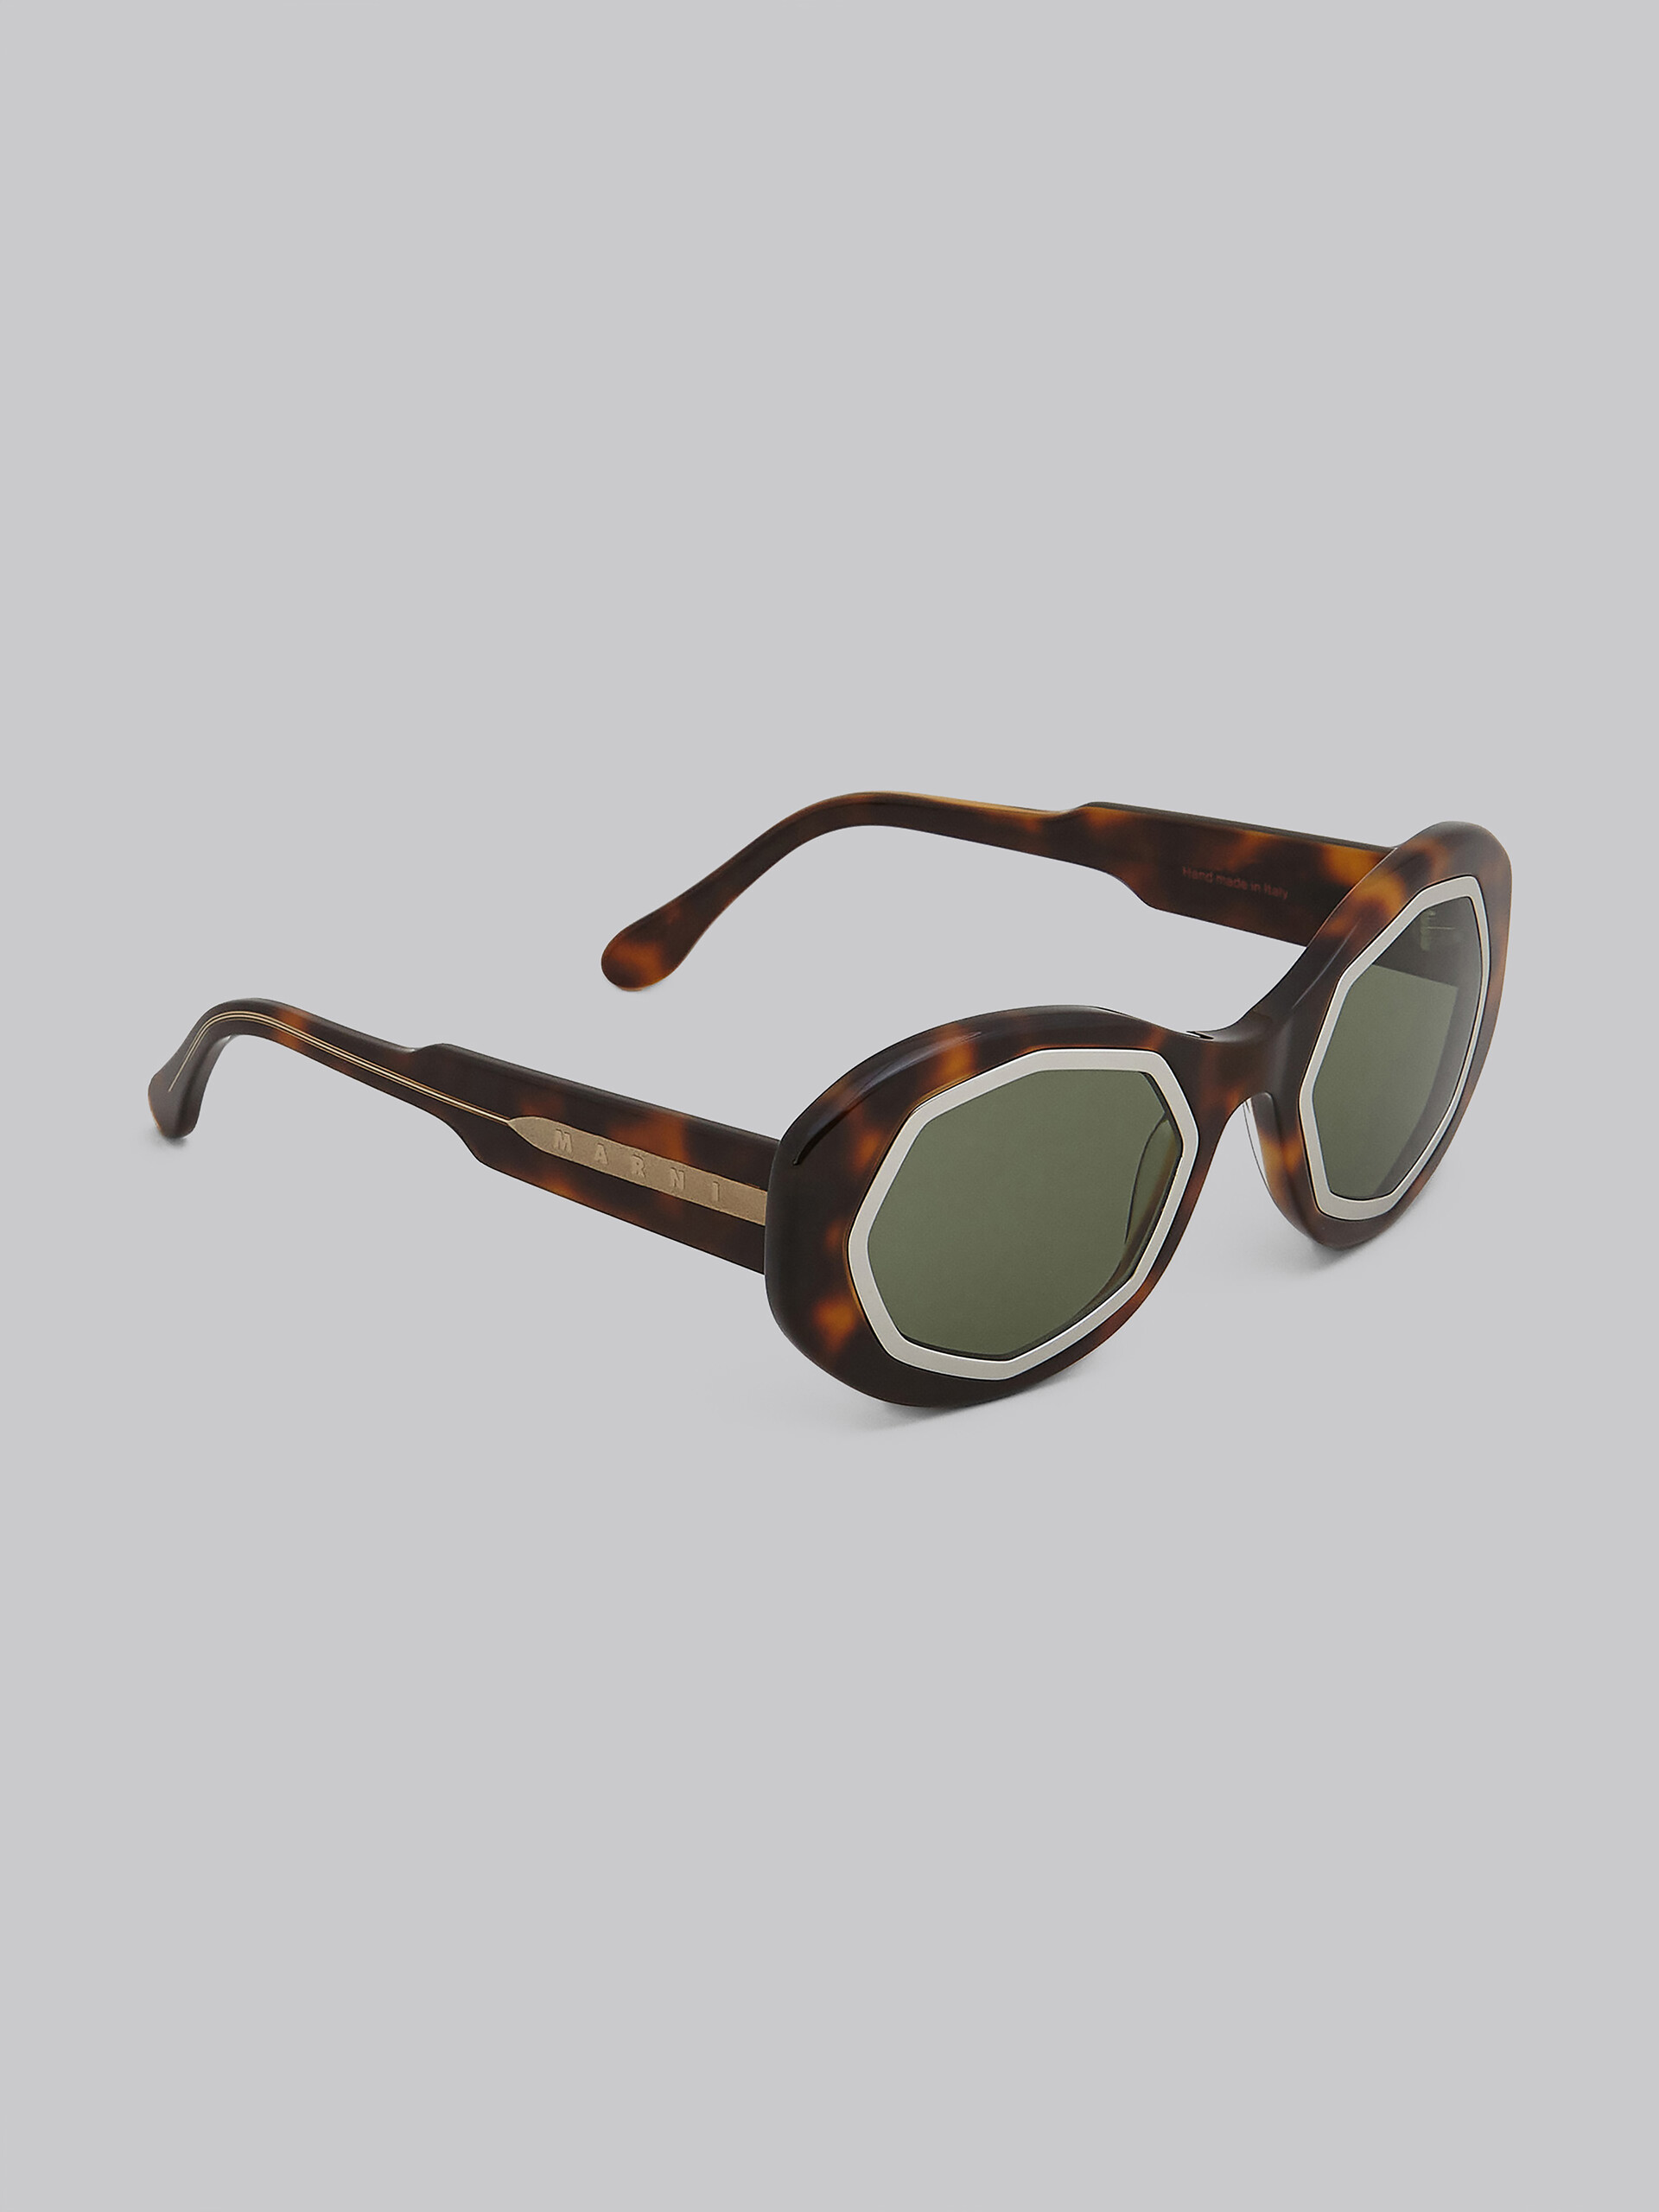 Tortoiseshell MOUNT BRUMO acetate sunglasses - Optical - Image 3